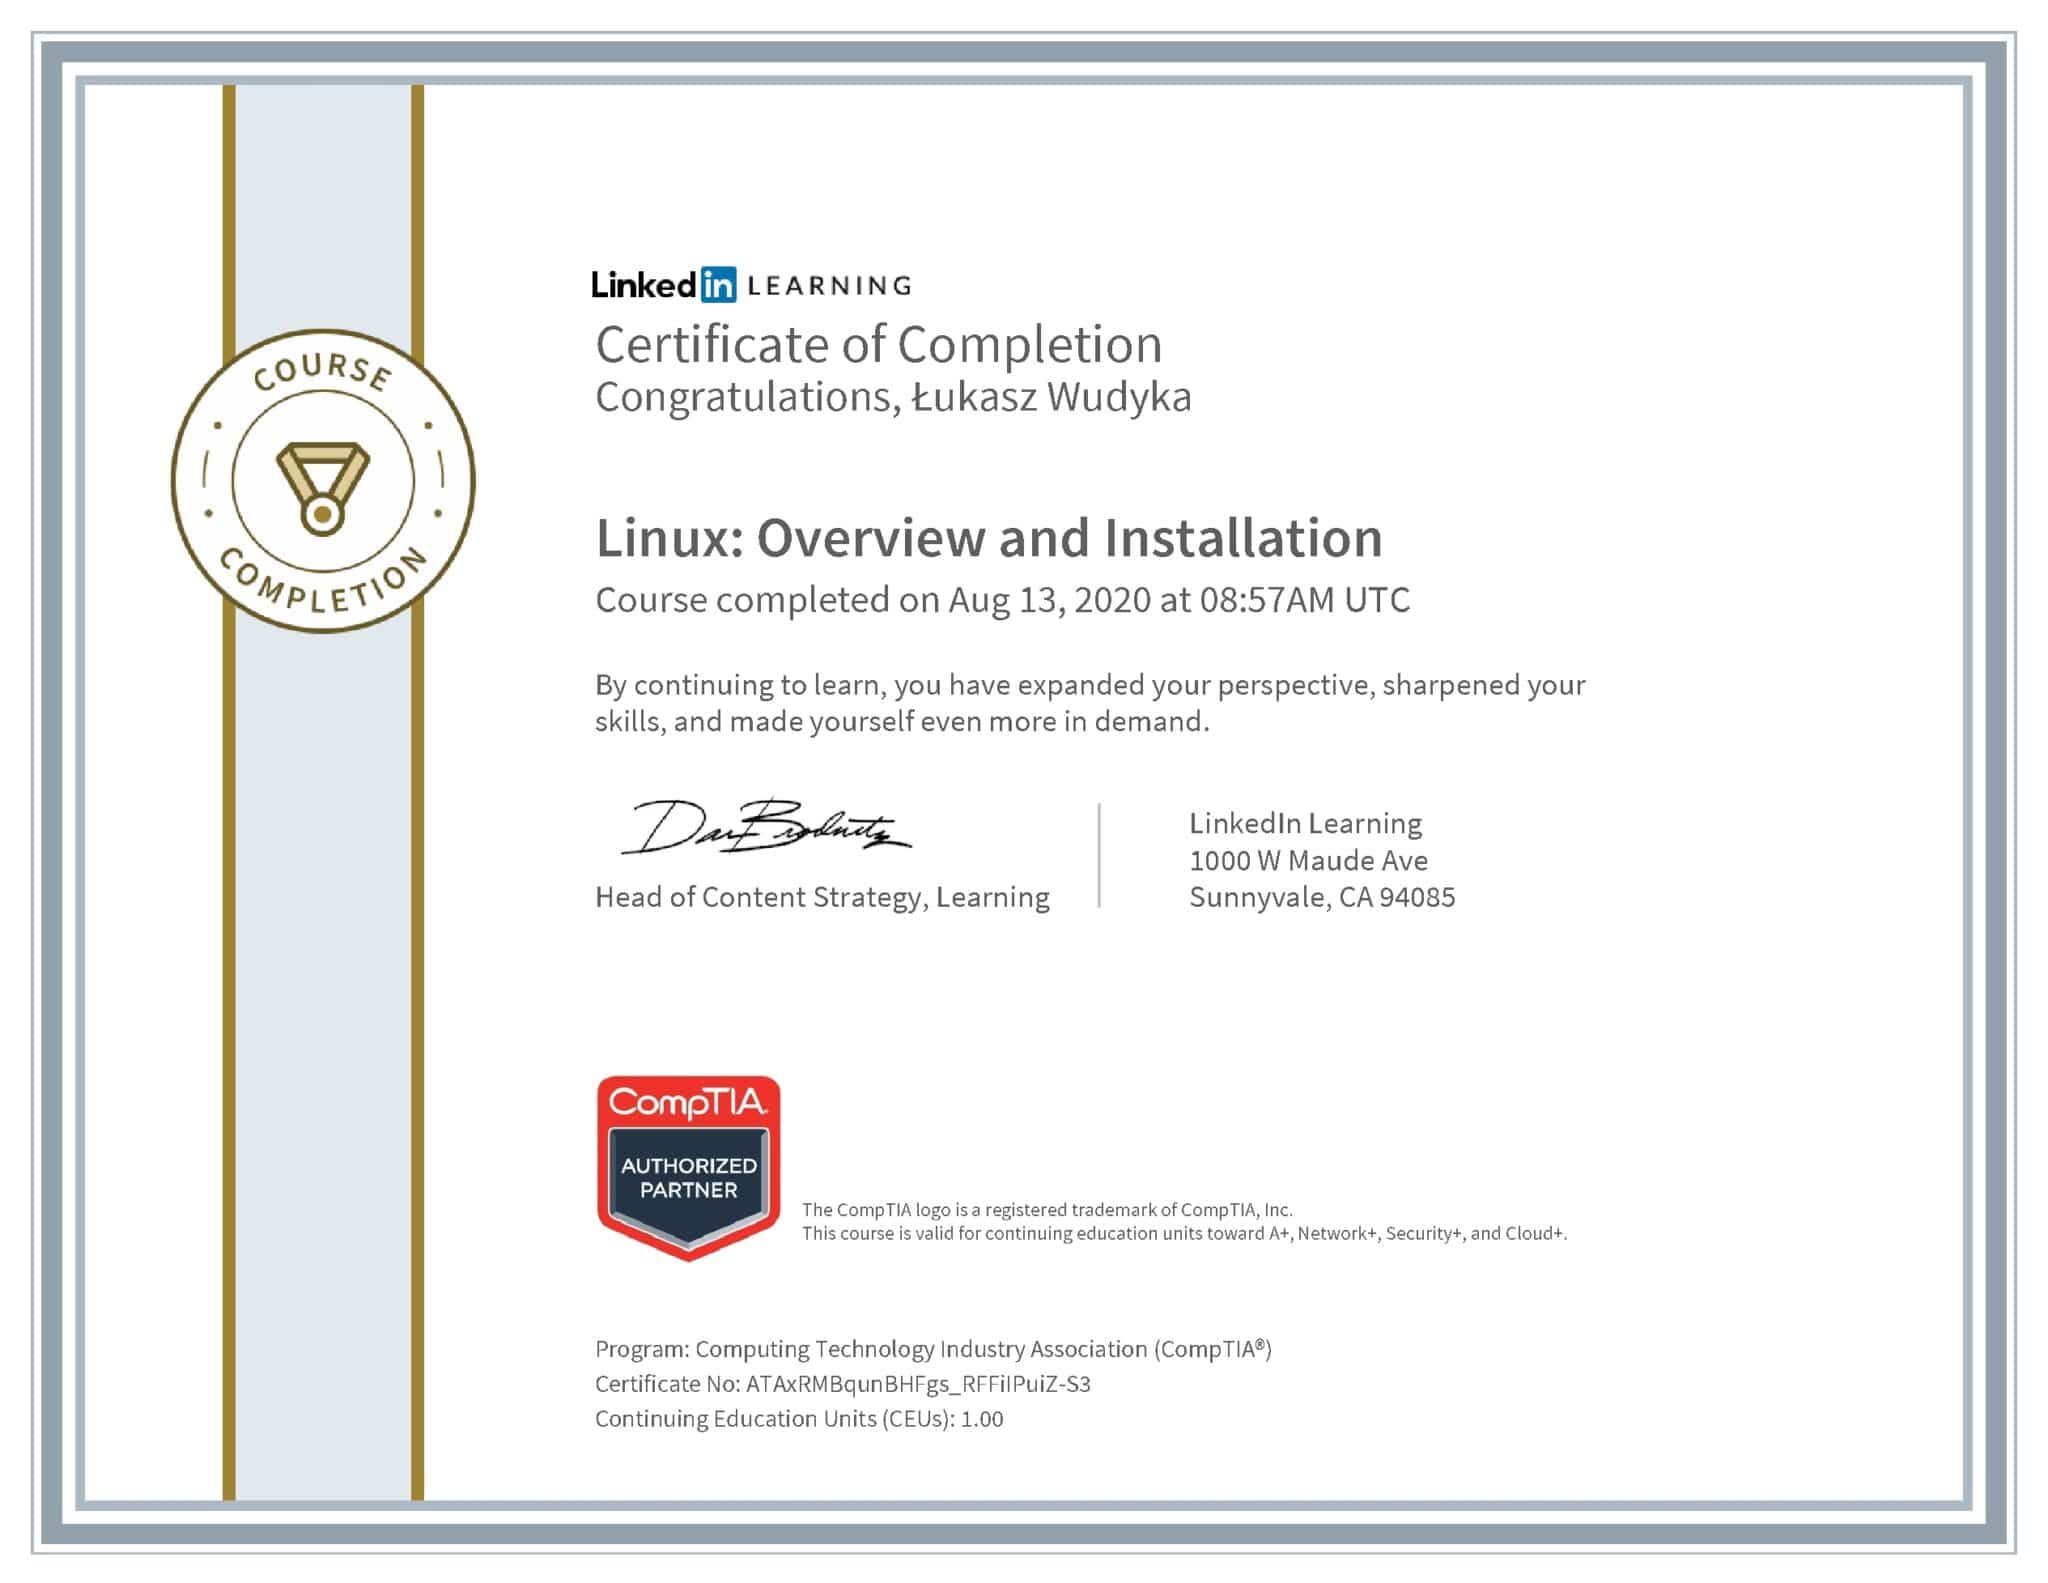 Łukasz Wudyka certyfikat LinkedIn Linux: Overview and Installation CompTIA